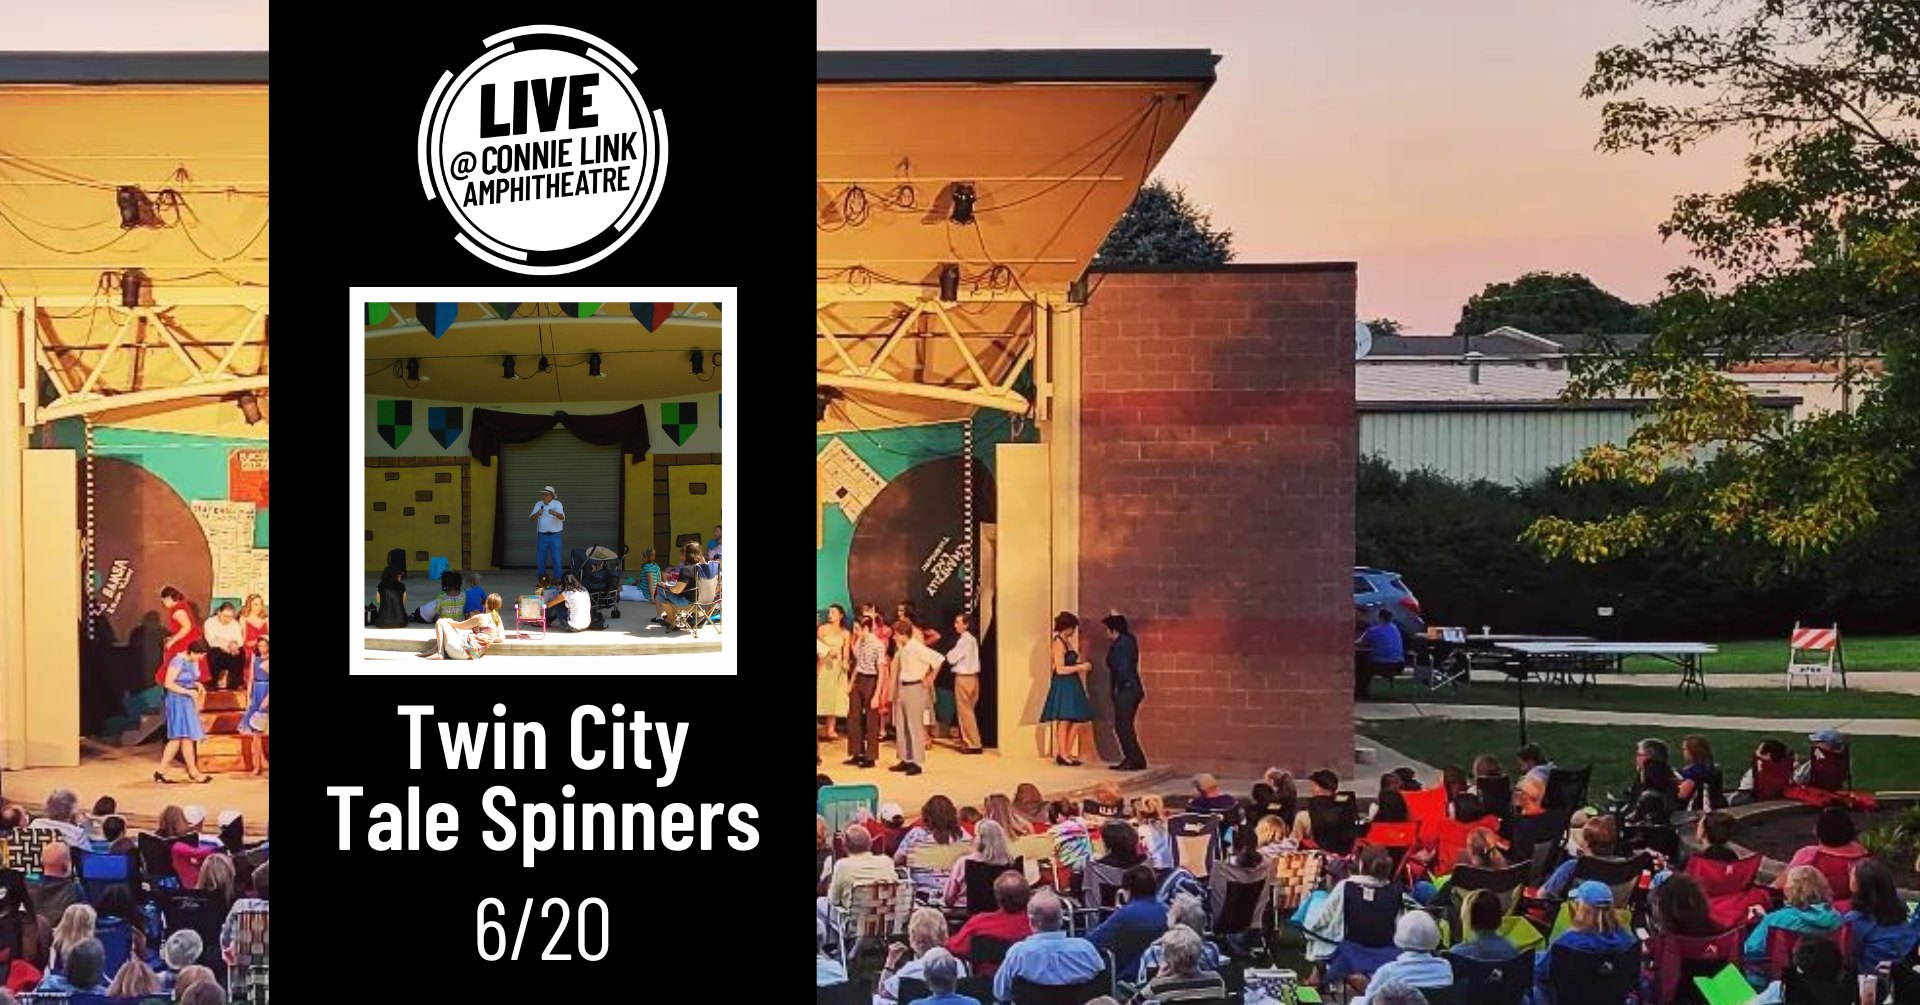 Terrific Thursdays: Twin City Tale Spinners - Live @ Connie Link Amphitheatre